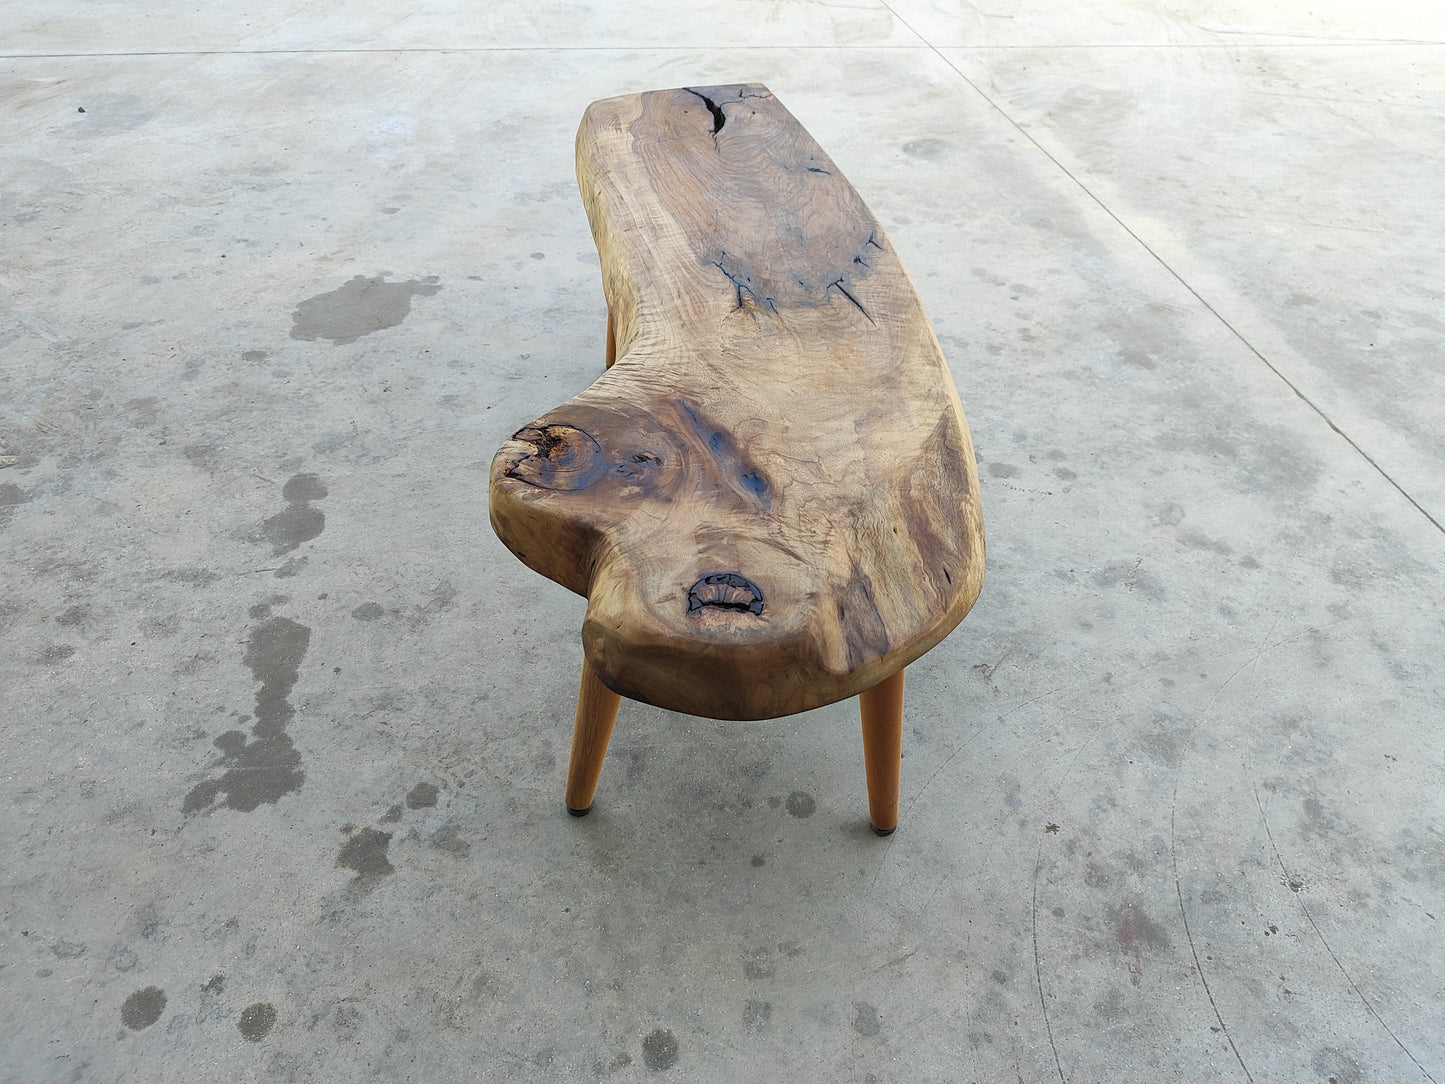 Rustic Handmade Wood Coffee Table - Unique Walnut (WG-1075)